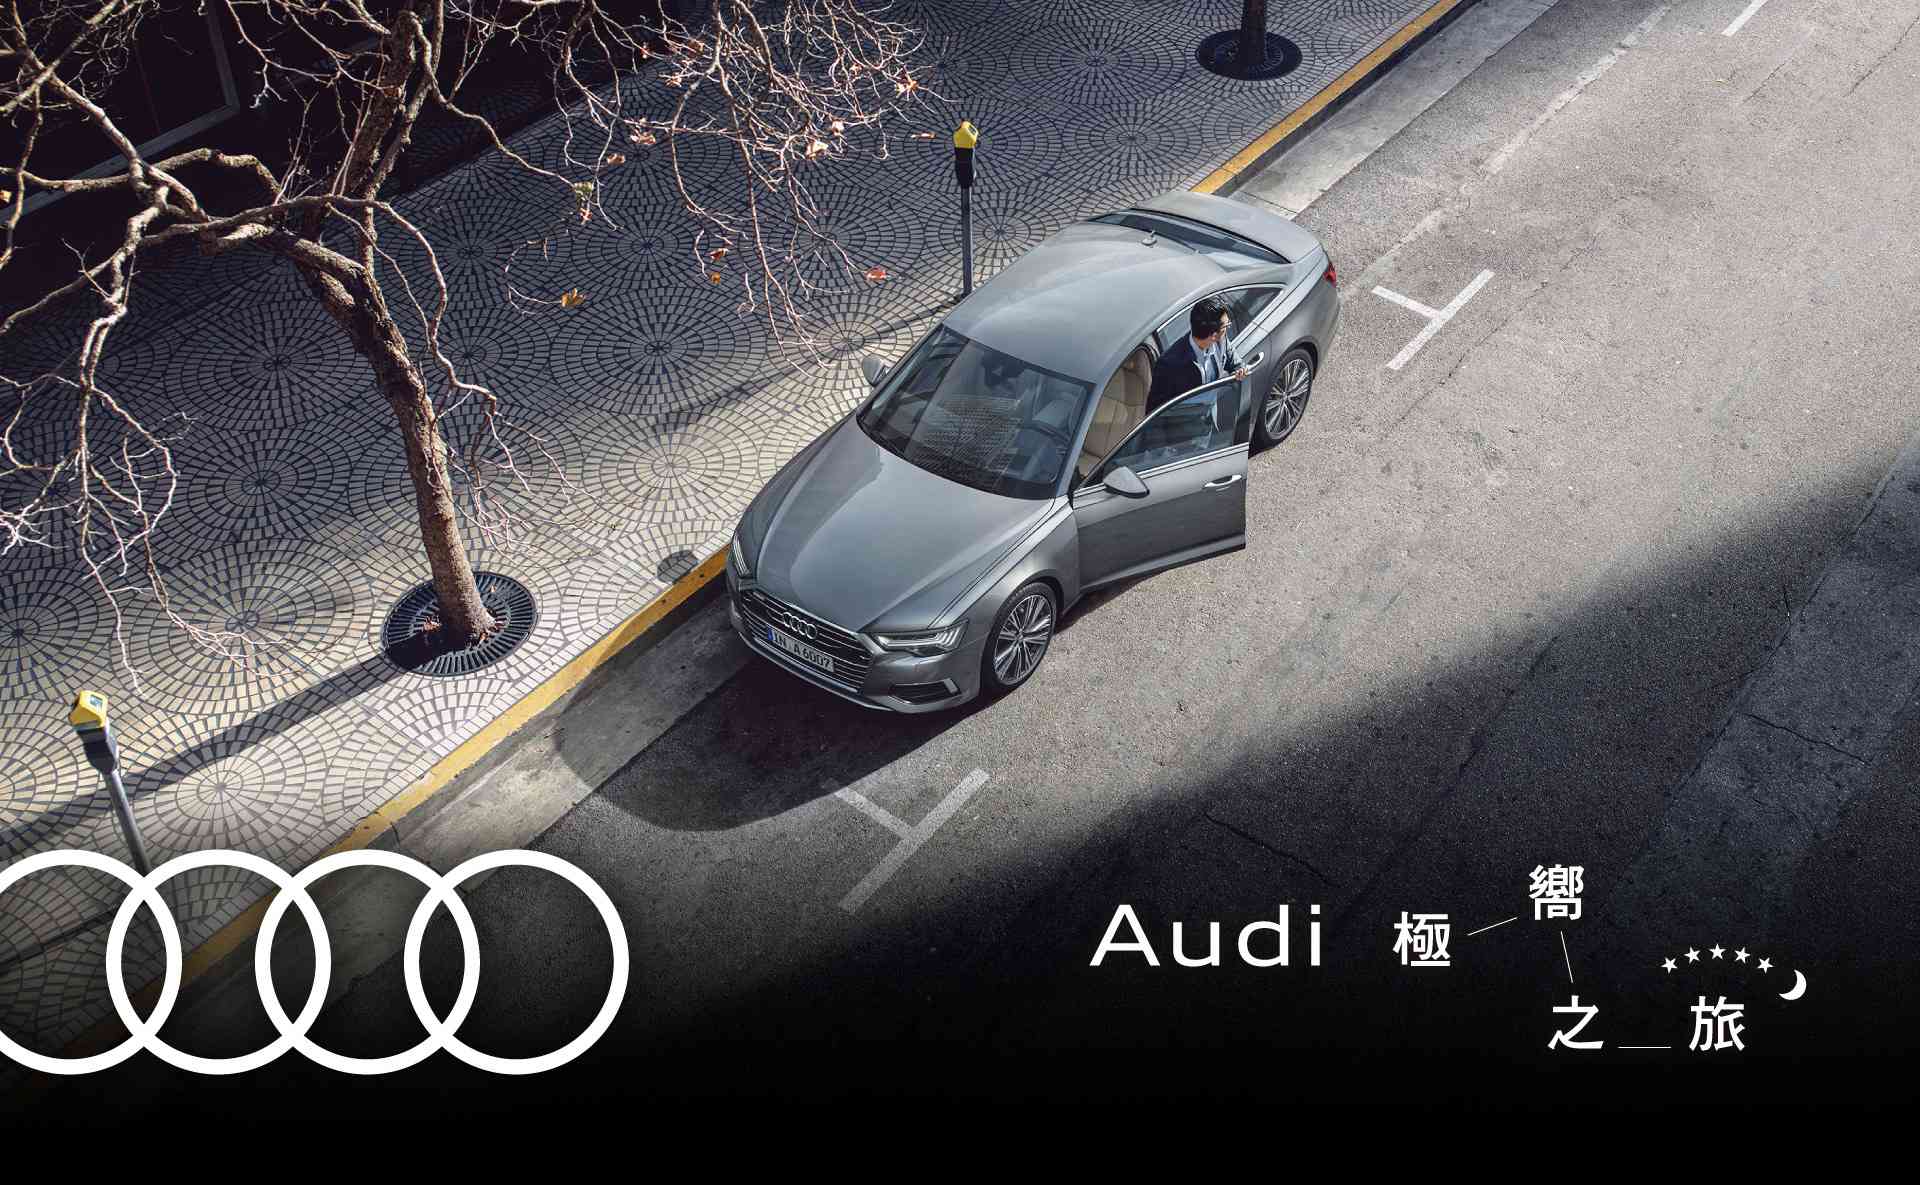 Audi 極嚮之旅試駕活動 邀您一同感受不凡